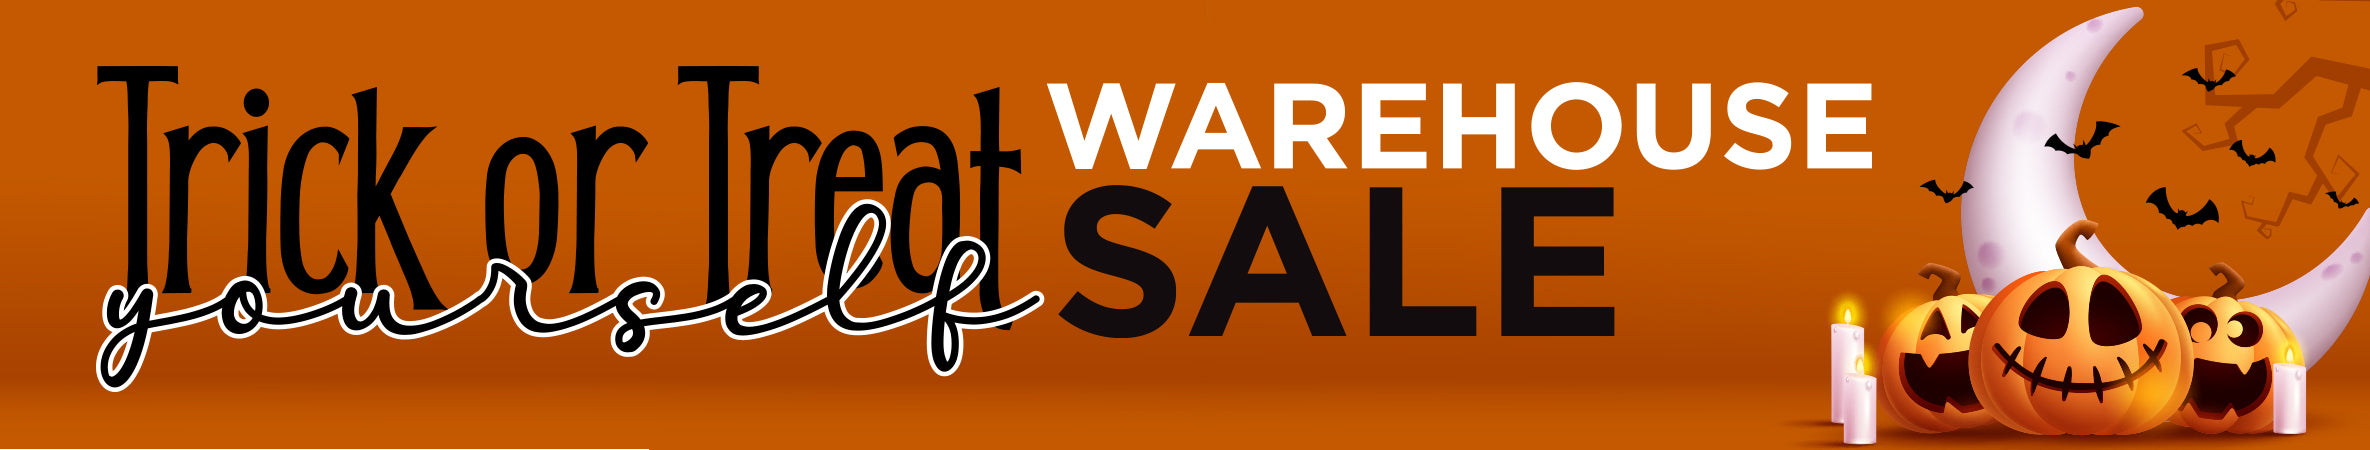 October Warehouse Sale